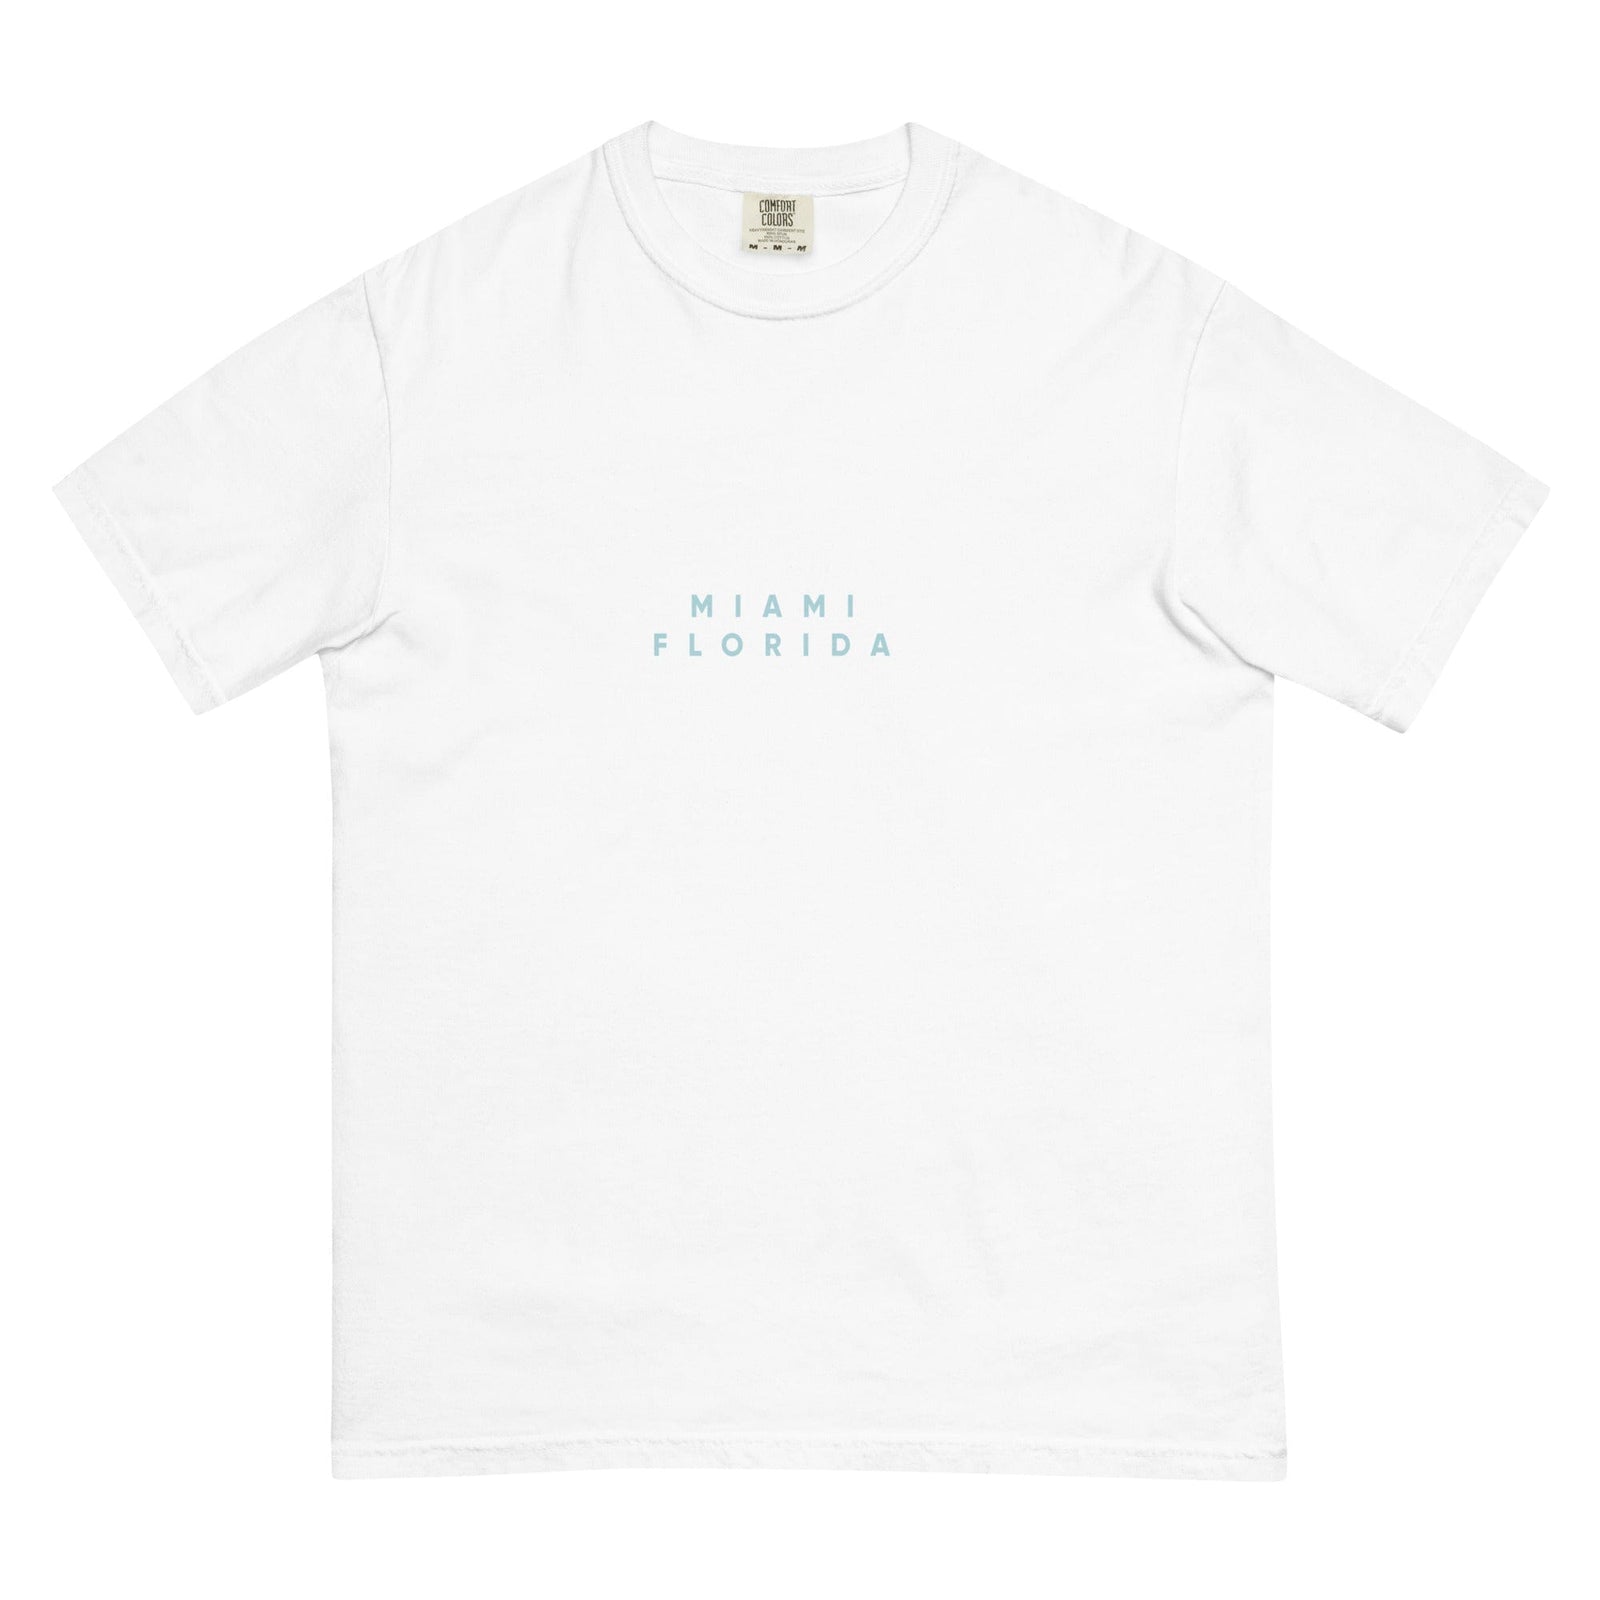 City Shirt Co Miami Comfort Colors T-Shirt White / S